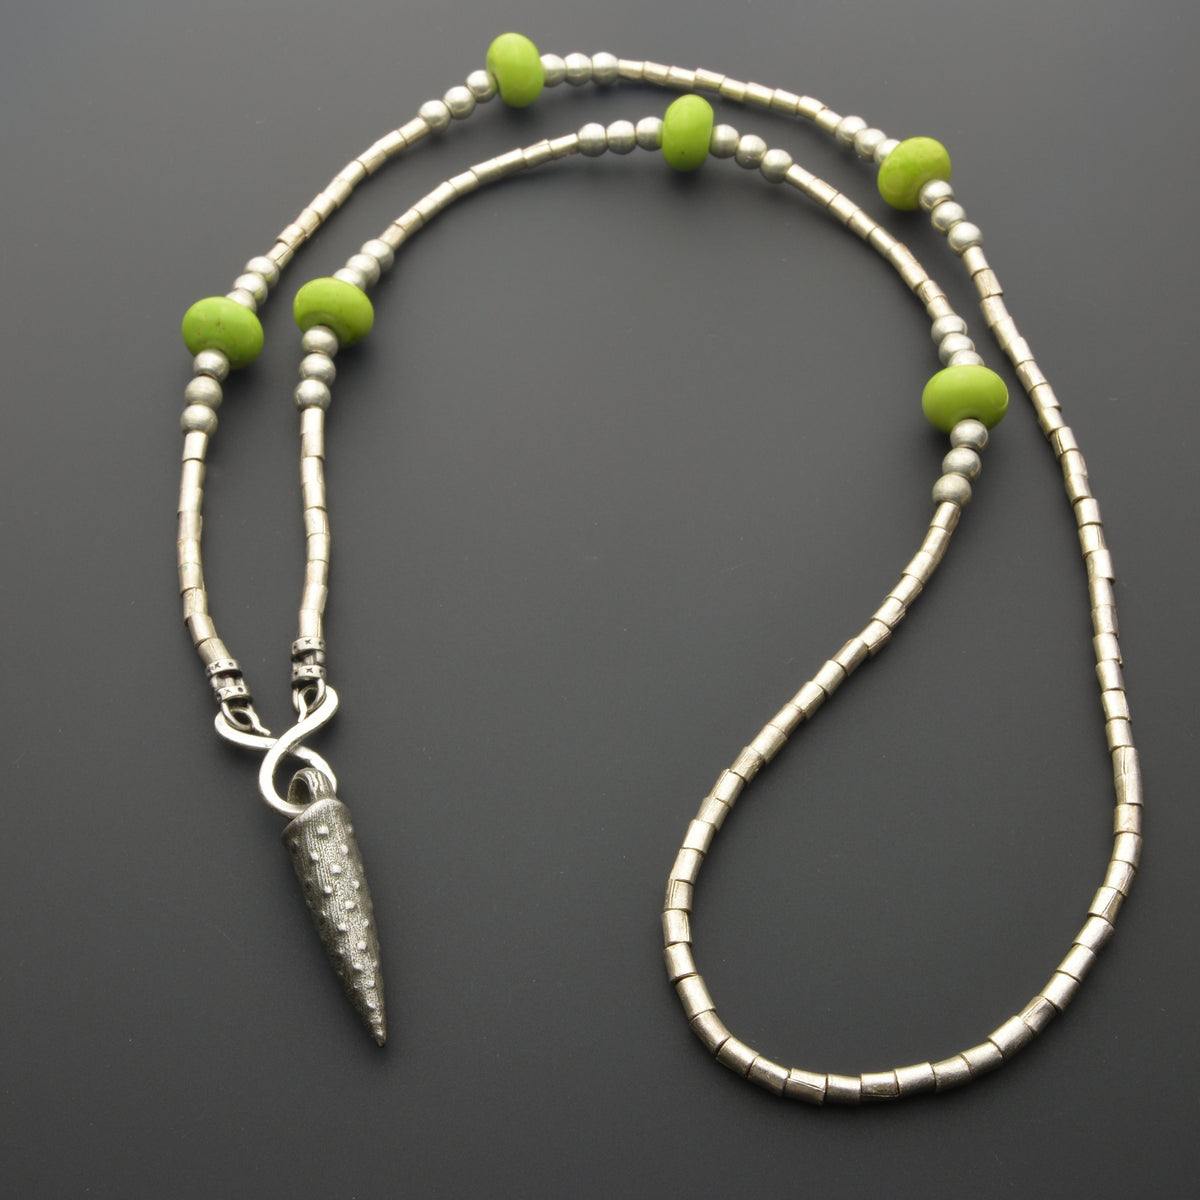 Green California ceramic beads and iron pendant